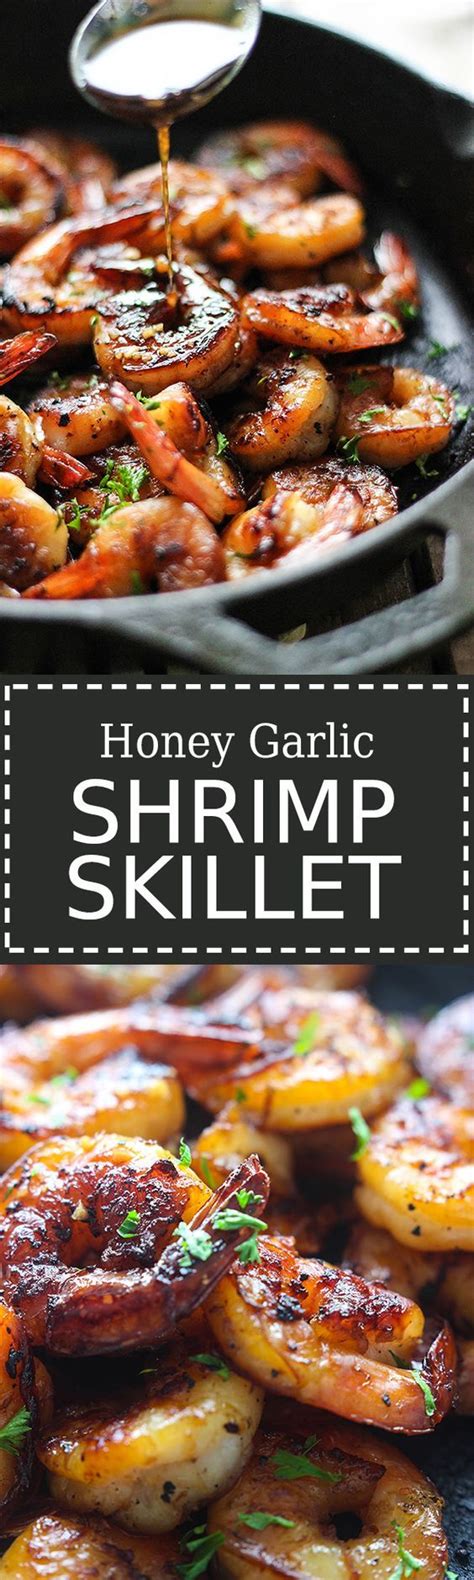 Honey Garlic Shrimp Skillet Recipe Food Recipes Cooking Seafood